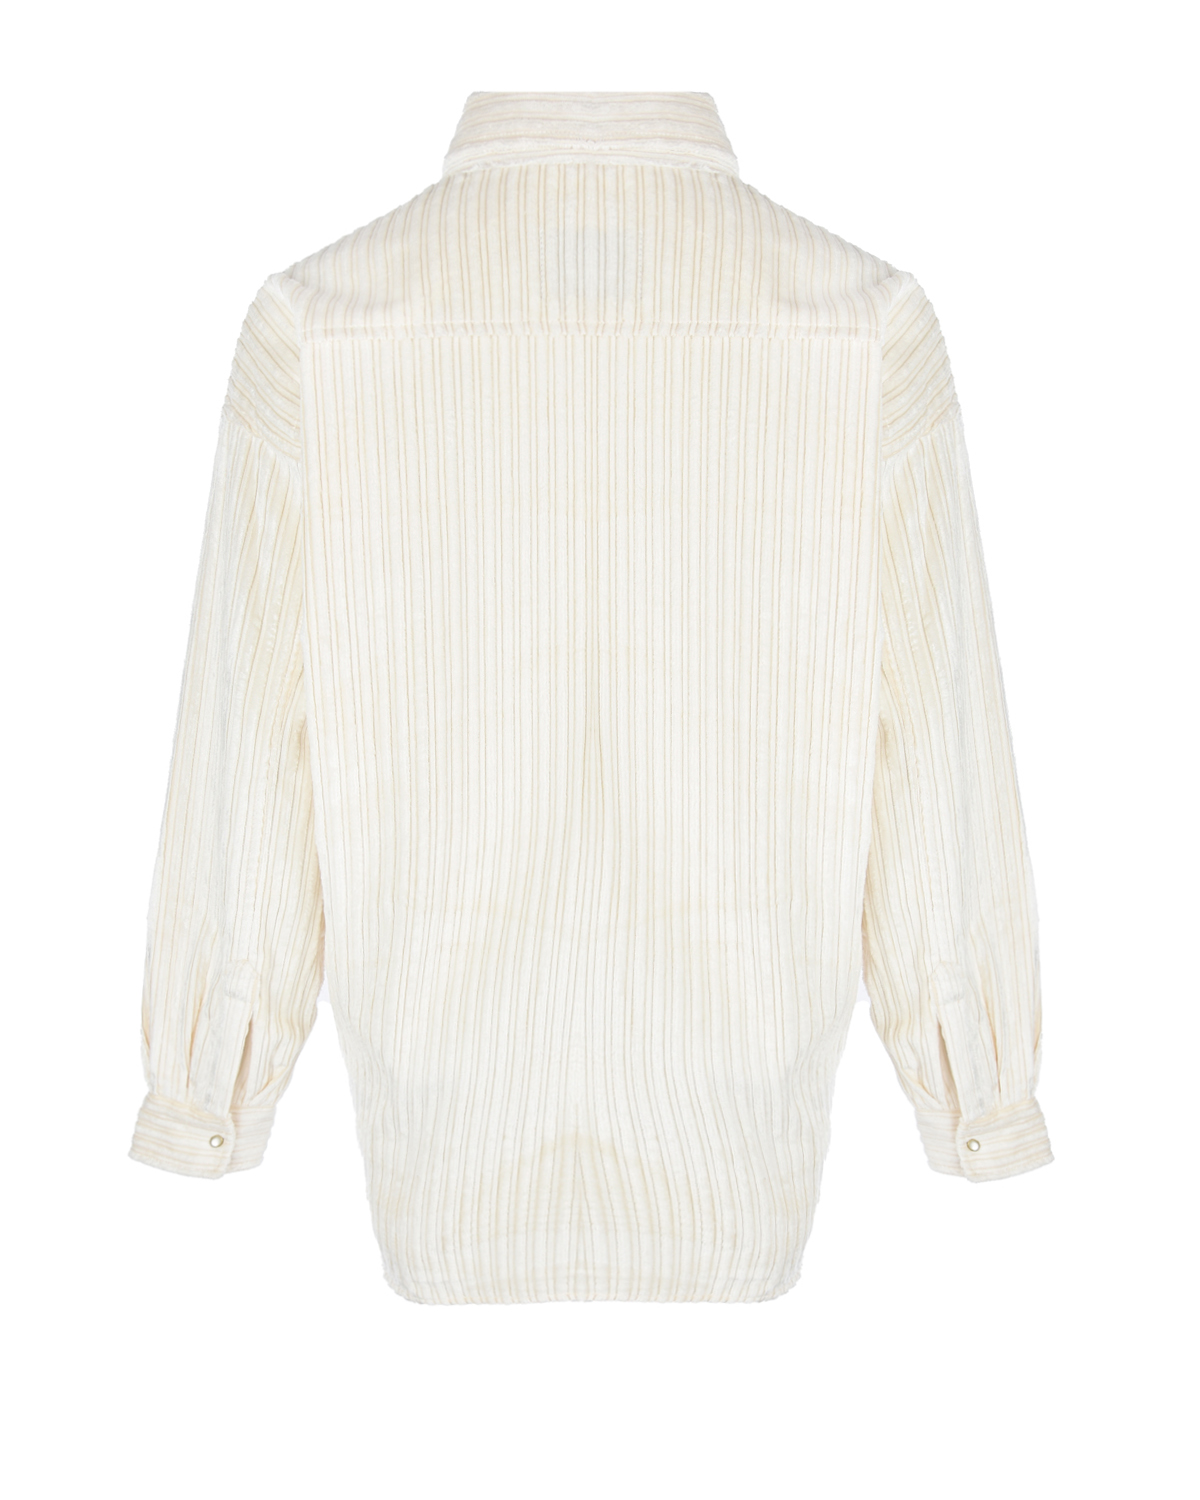 Вельветовая рубашка молочного цвета Forte dei Marmi Couture, размер 42 - фото 6